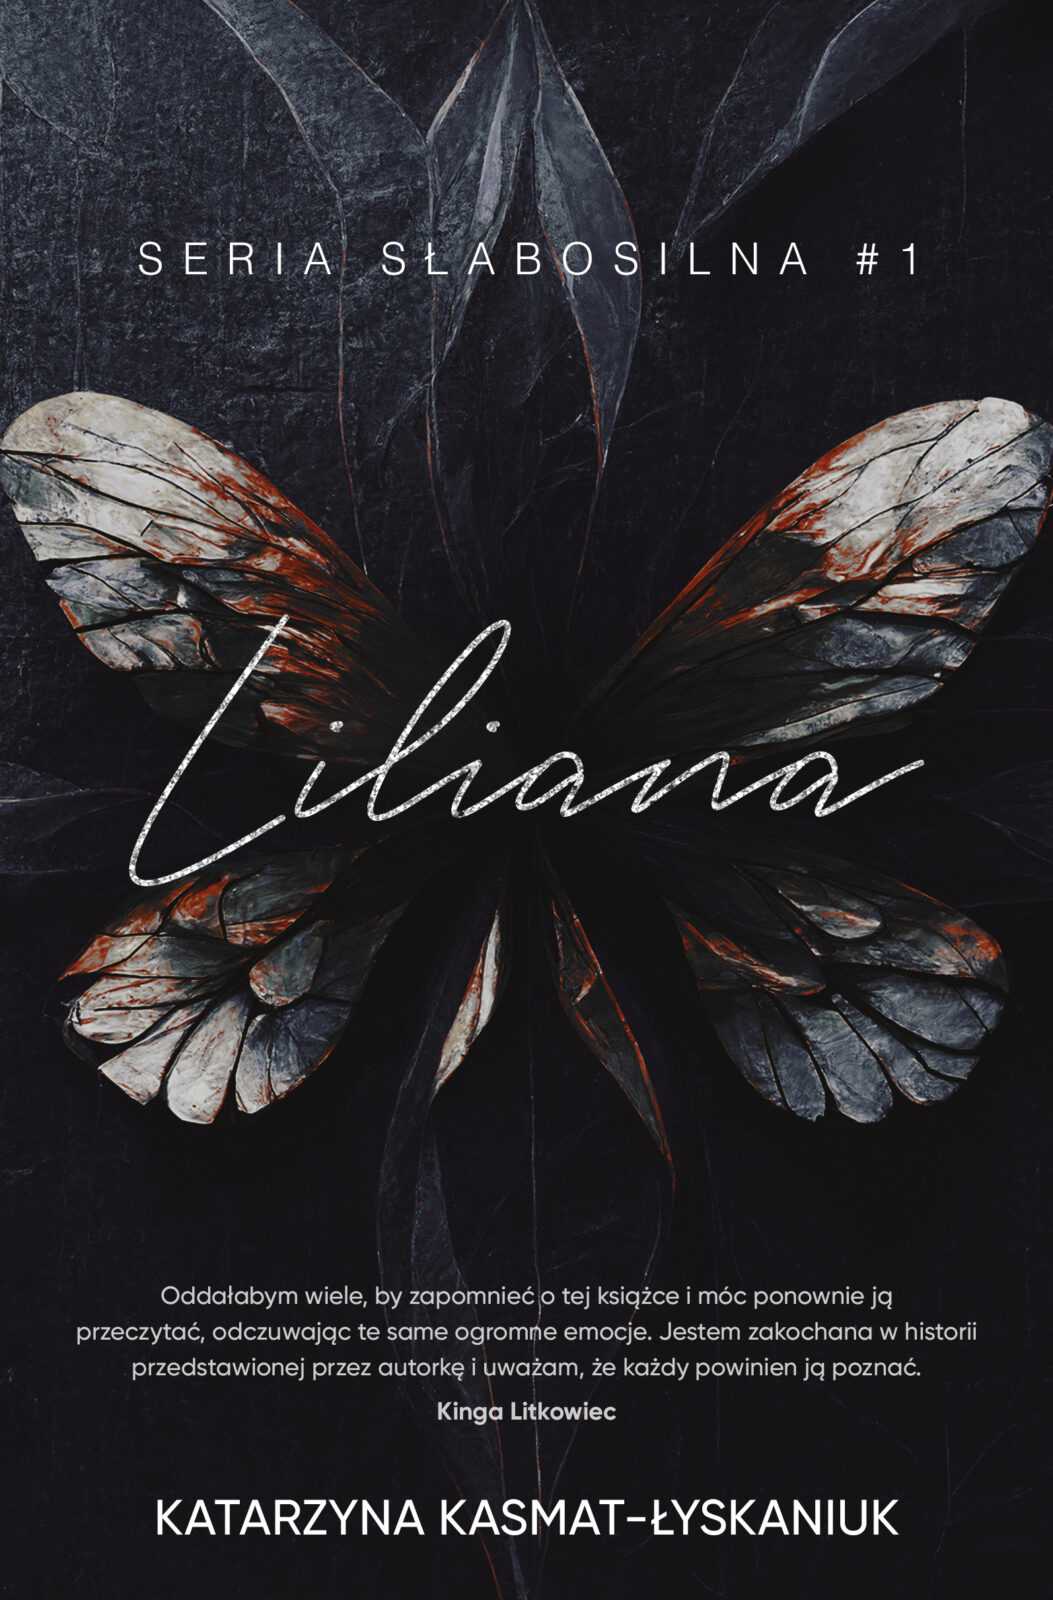 Liliana #1 Katarzyna Kasmat-Łyskaniuk – Black Rose